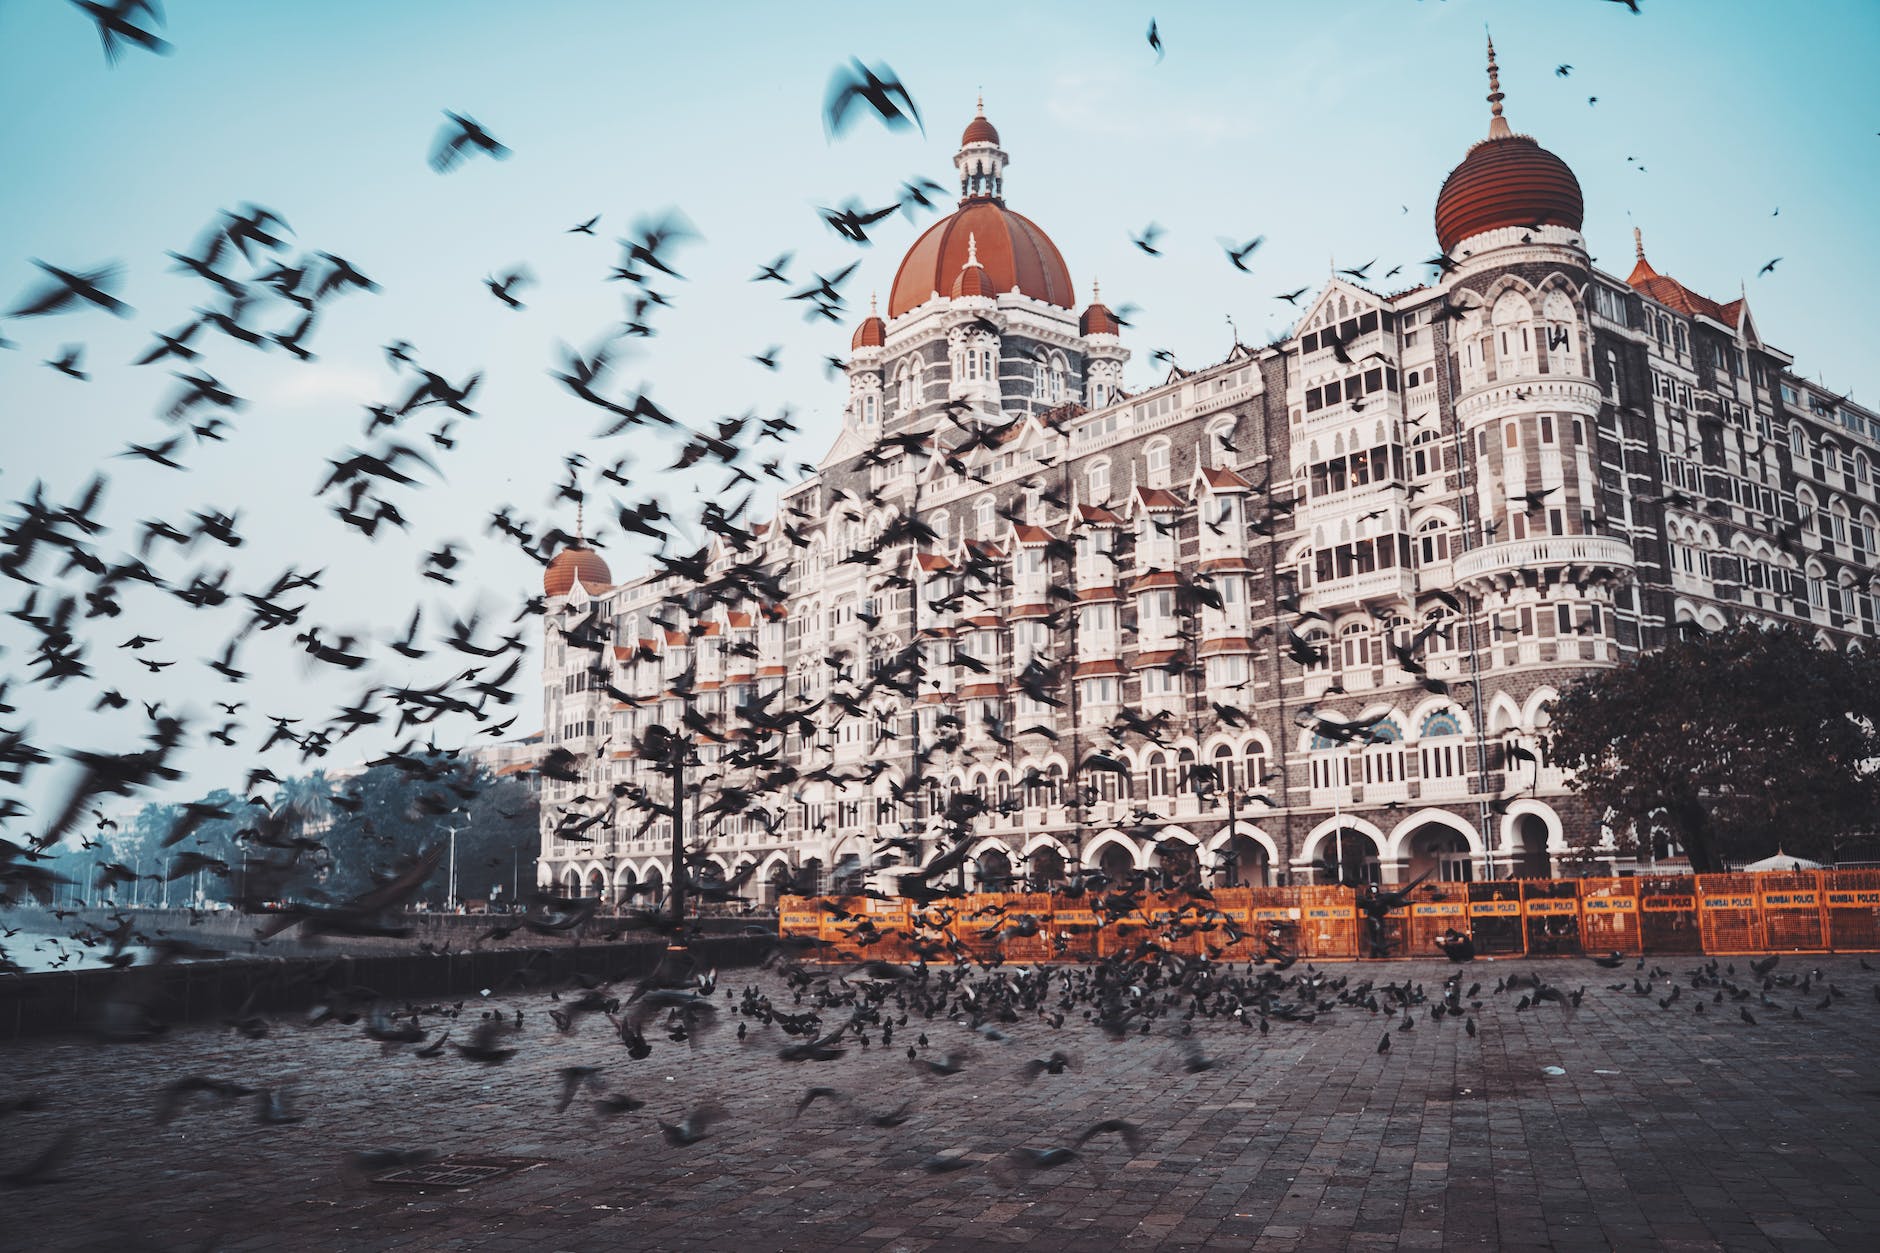 flock of birds flying near the taj mahal palace in mumbai